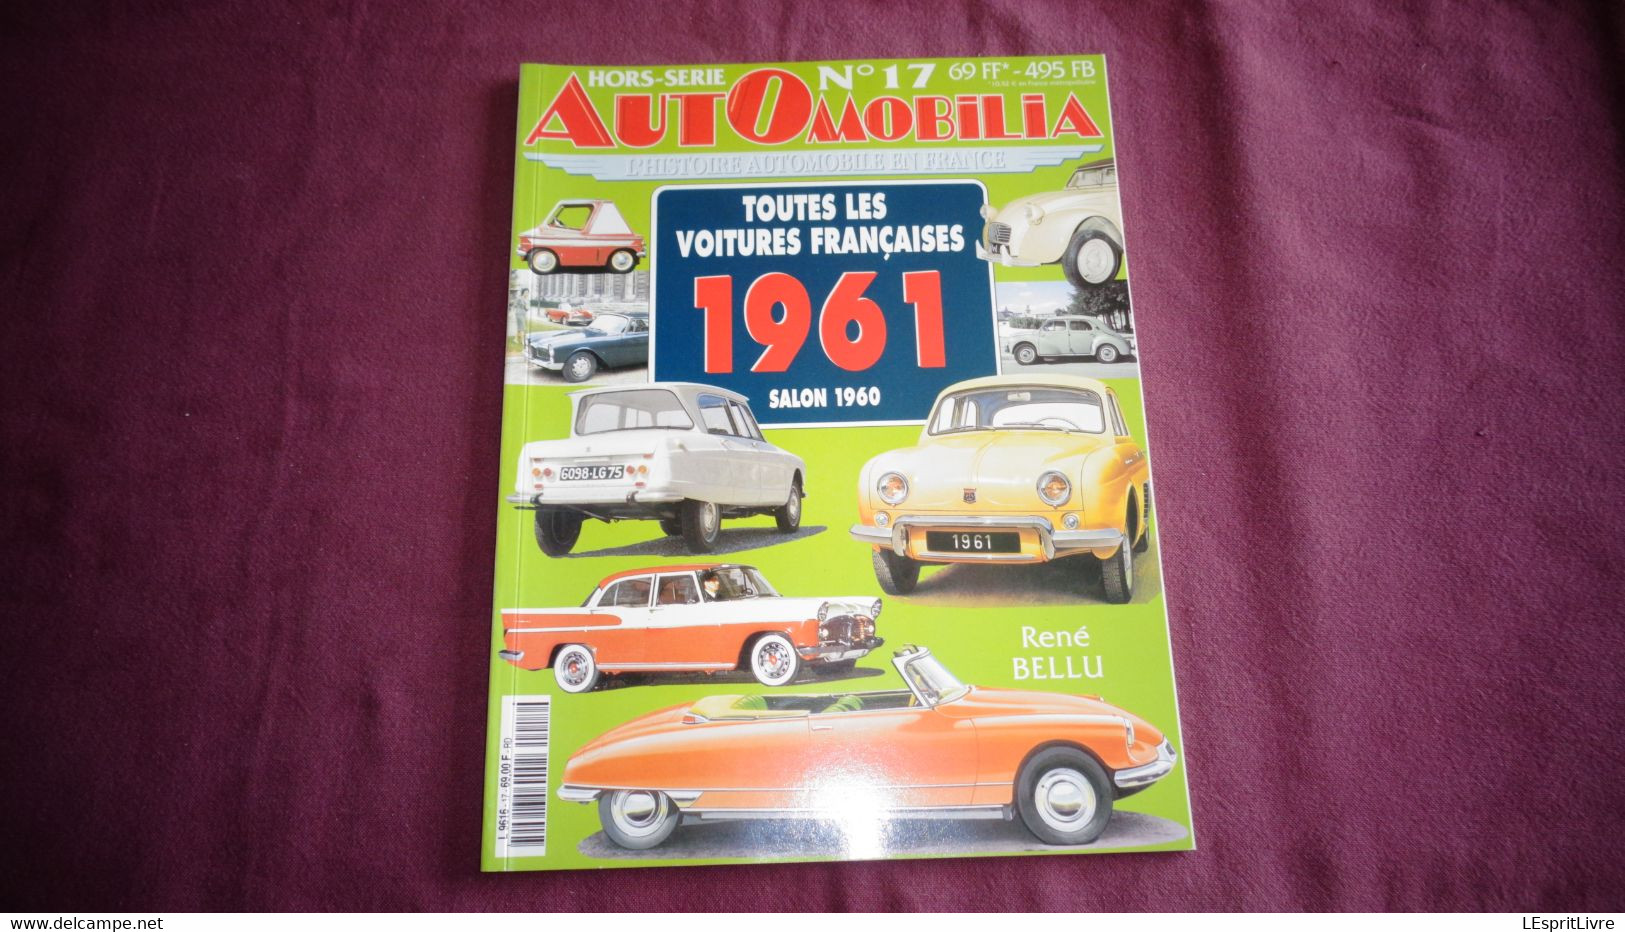 AUTOMOBILIA Hors Série N° 17 Salon Automobile 1960 Voiture Auto Renault R4 Simca Velam Vespa Arista Facel Hotchkiss Sera - Auto/Moto